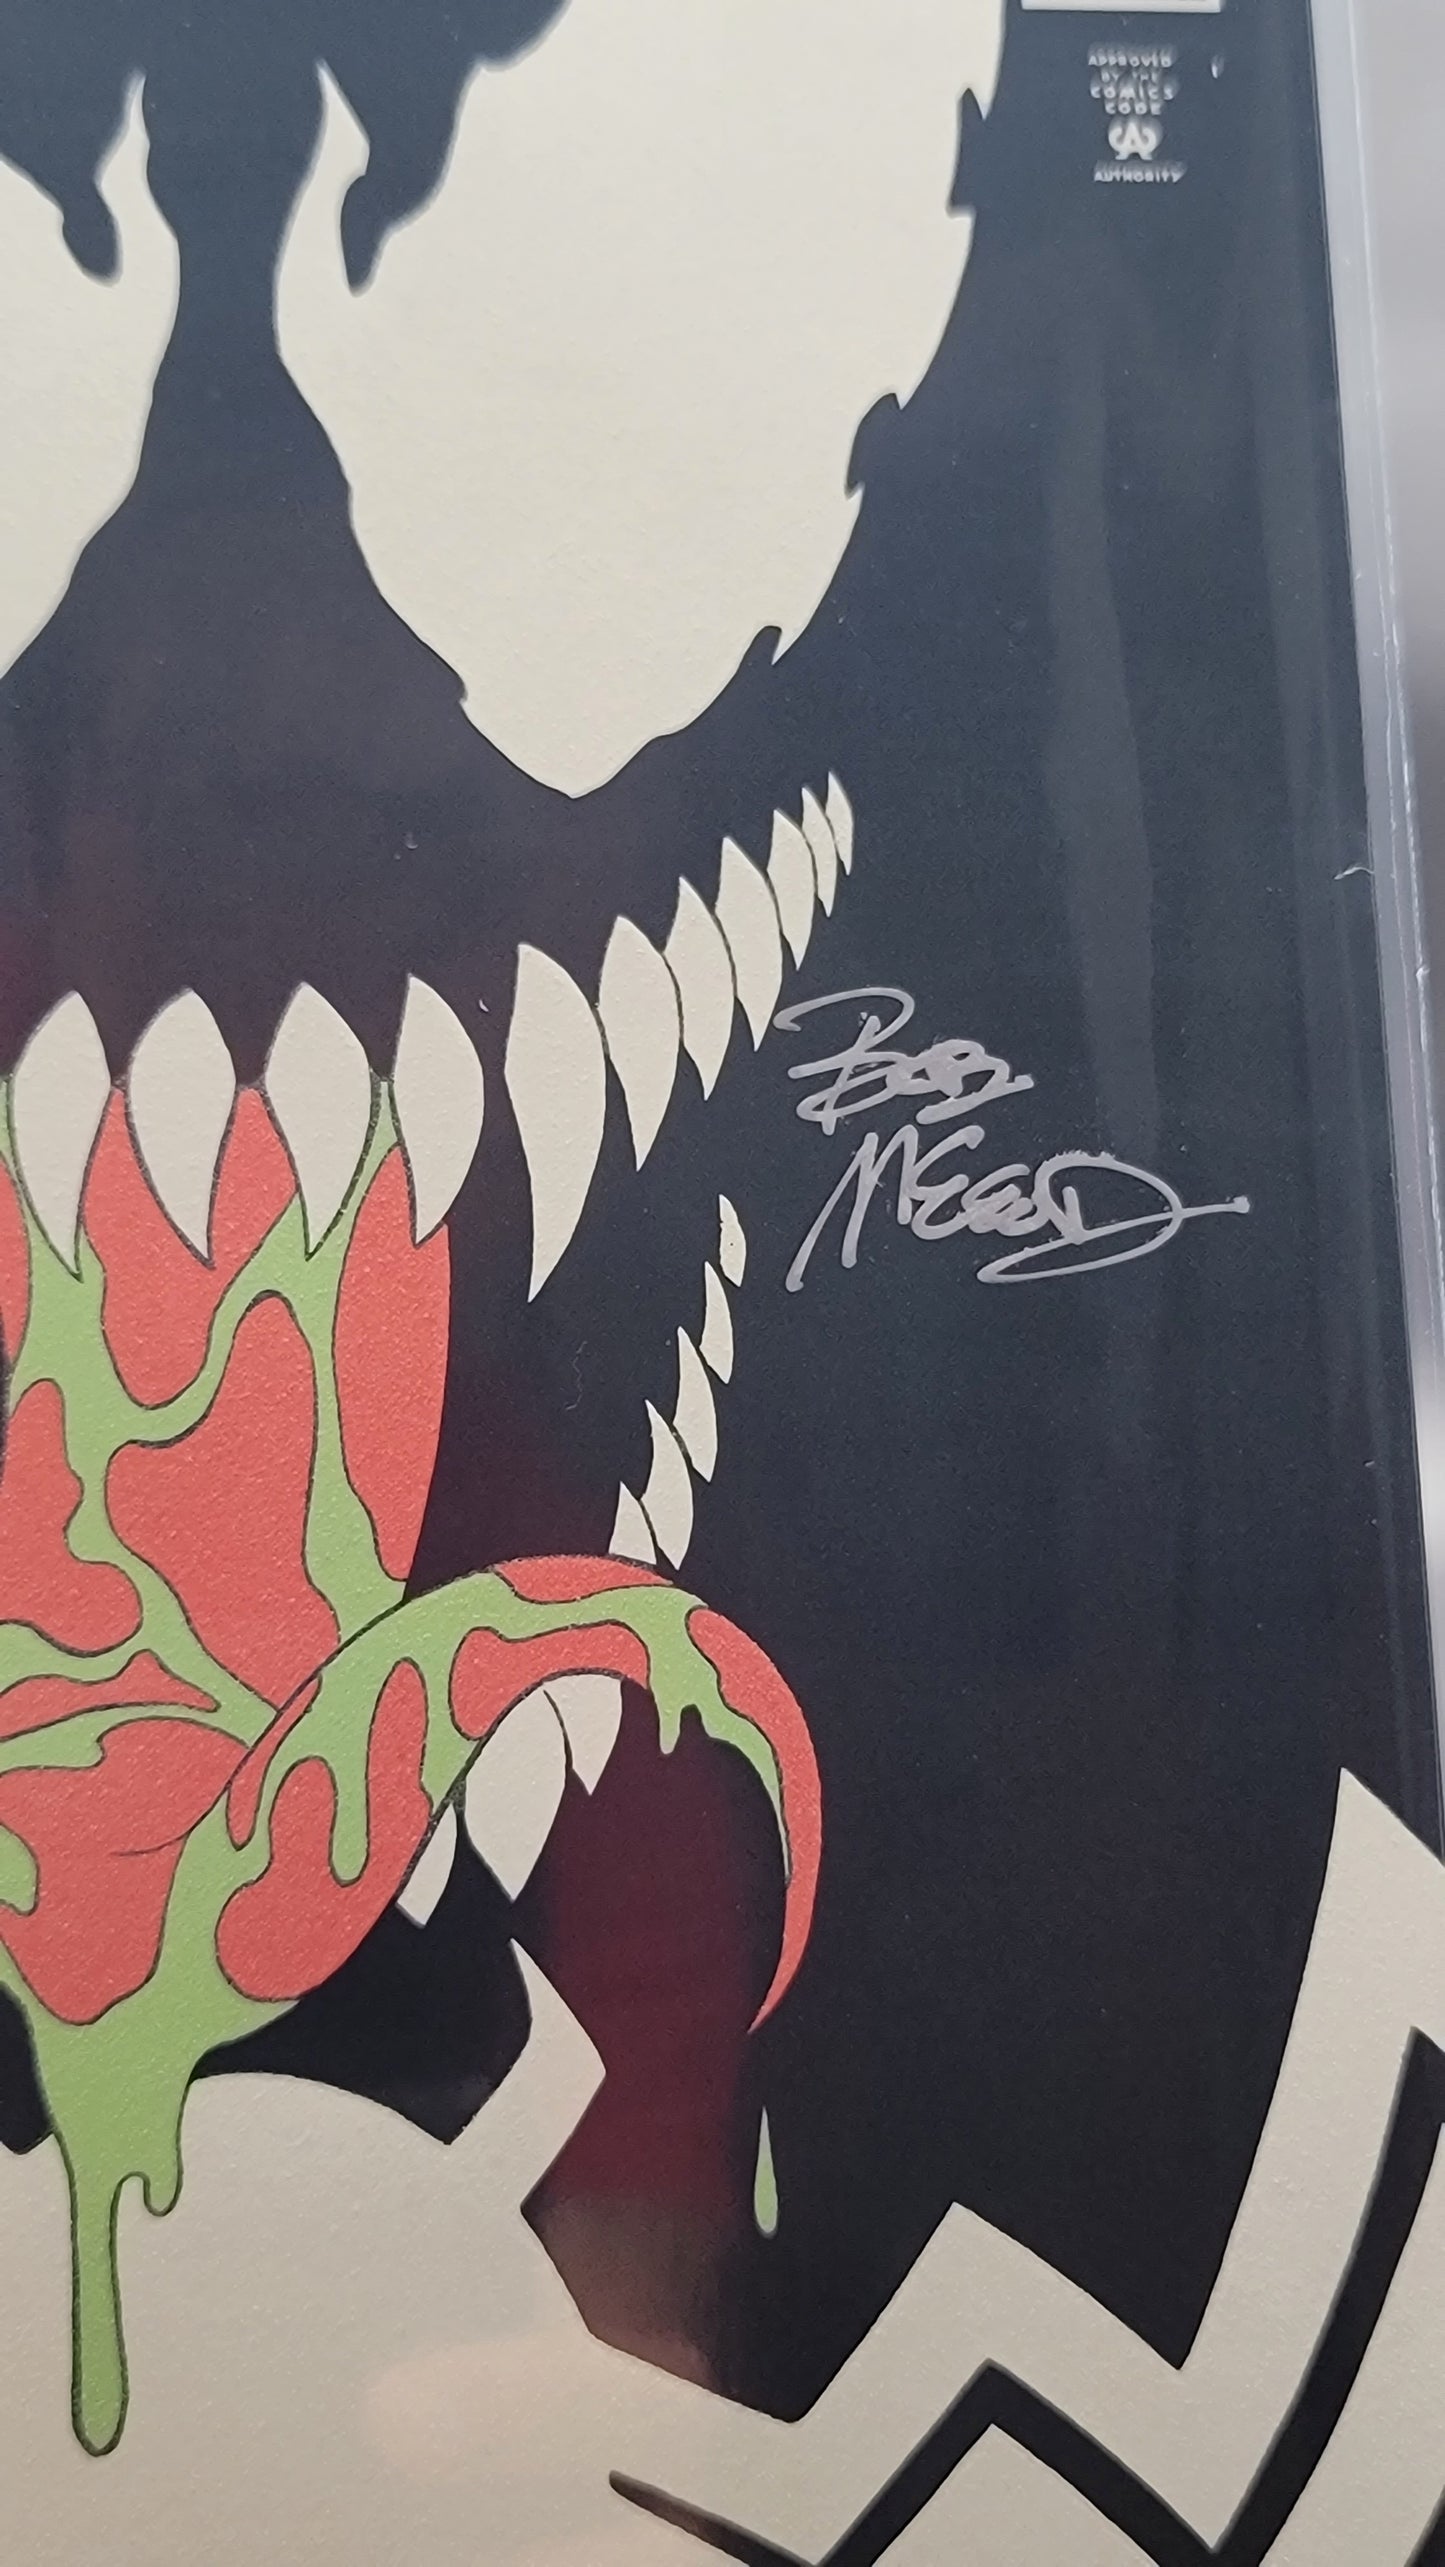 Venom: The Enemy Within #1 signed Bob McLeod